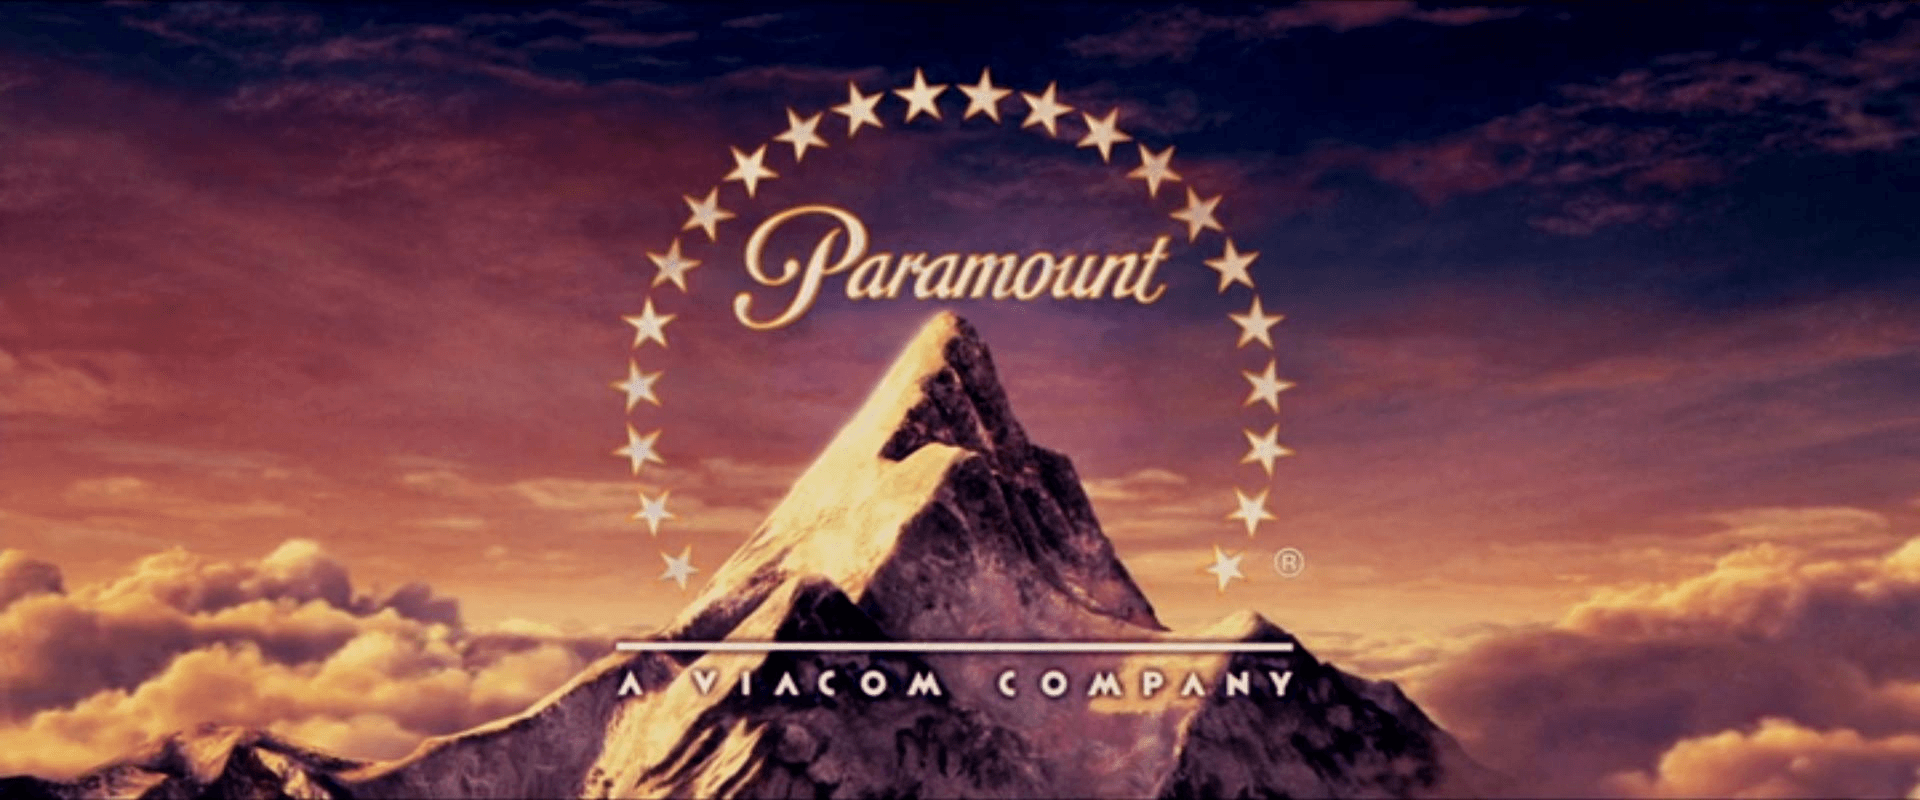 New Paramount Logo - Image - Paramount logo new.png | Logopedia | FANDOM powered by Wikia